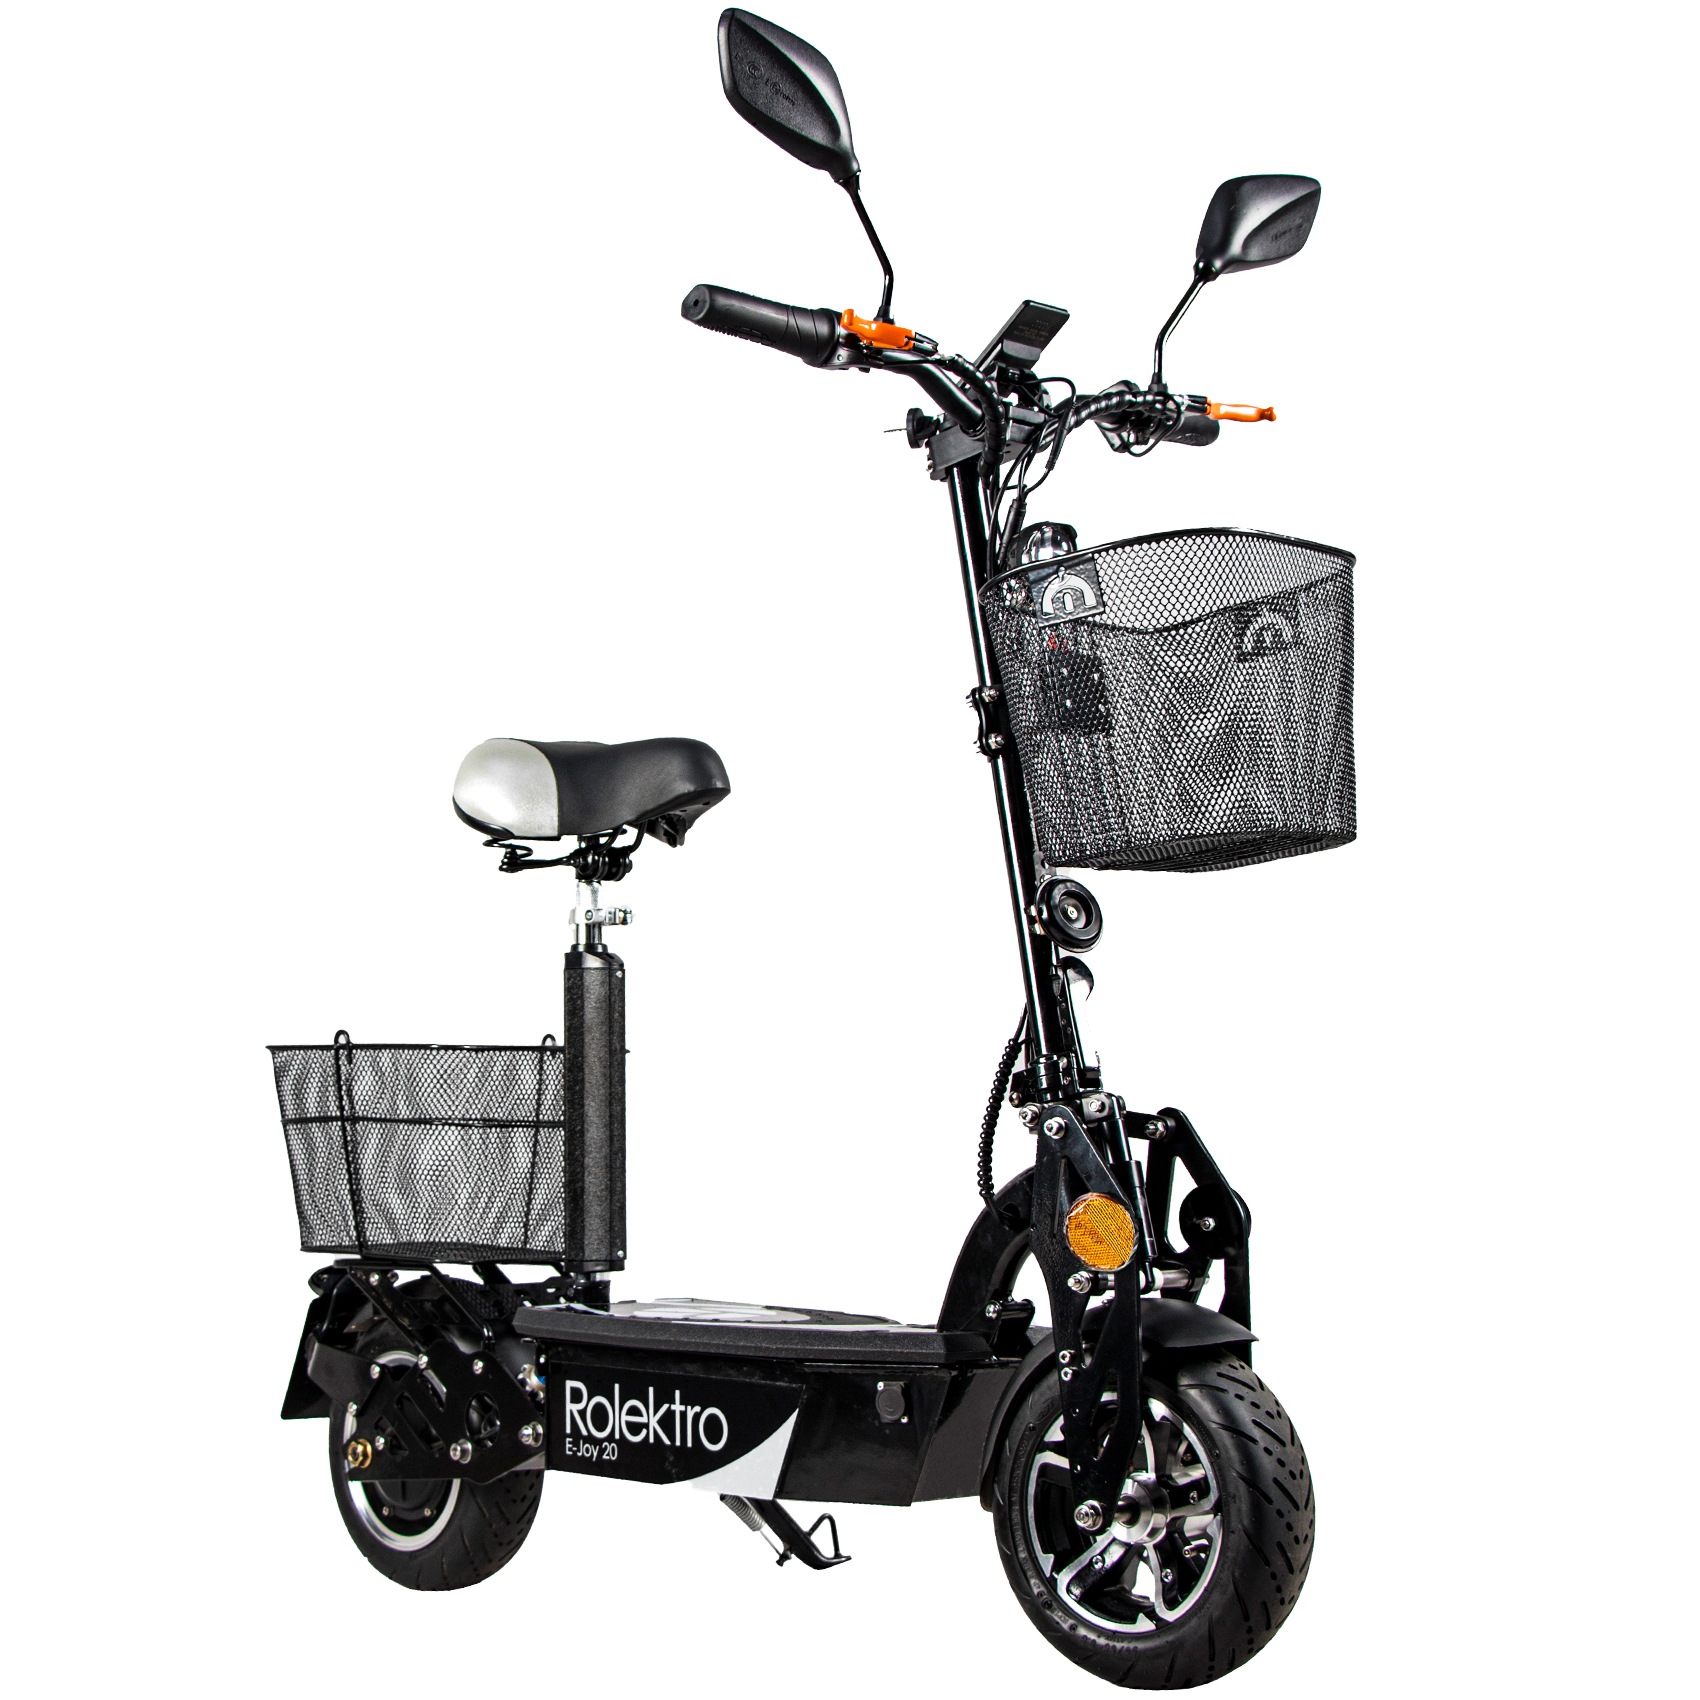 Rolektro E-Joy 20 Faltbarer Elektroroller - 20 km/h E-Roller mit Sitz 500W E-Scooter für Erwachsene EU-Zulassung